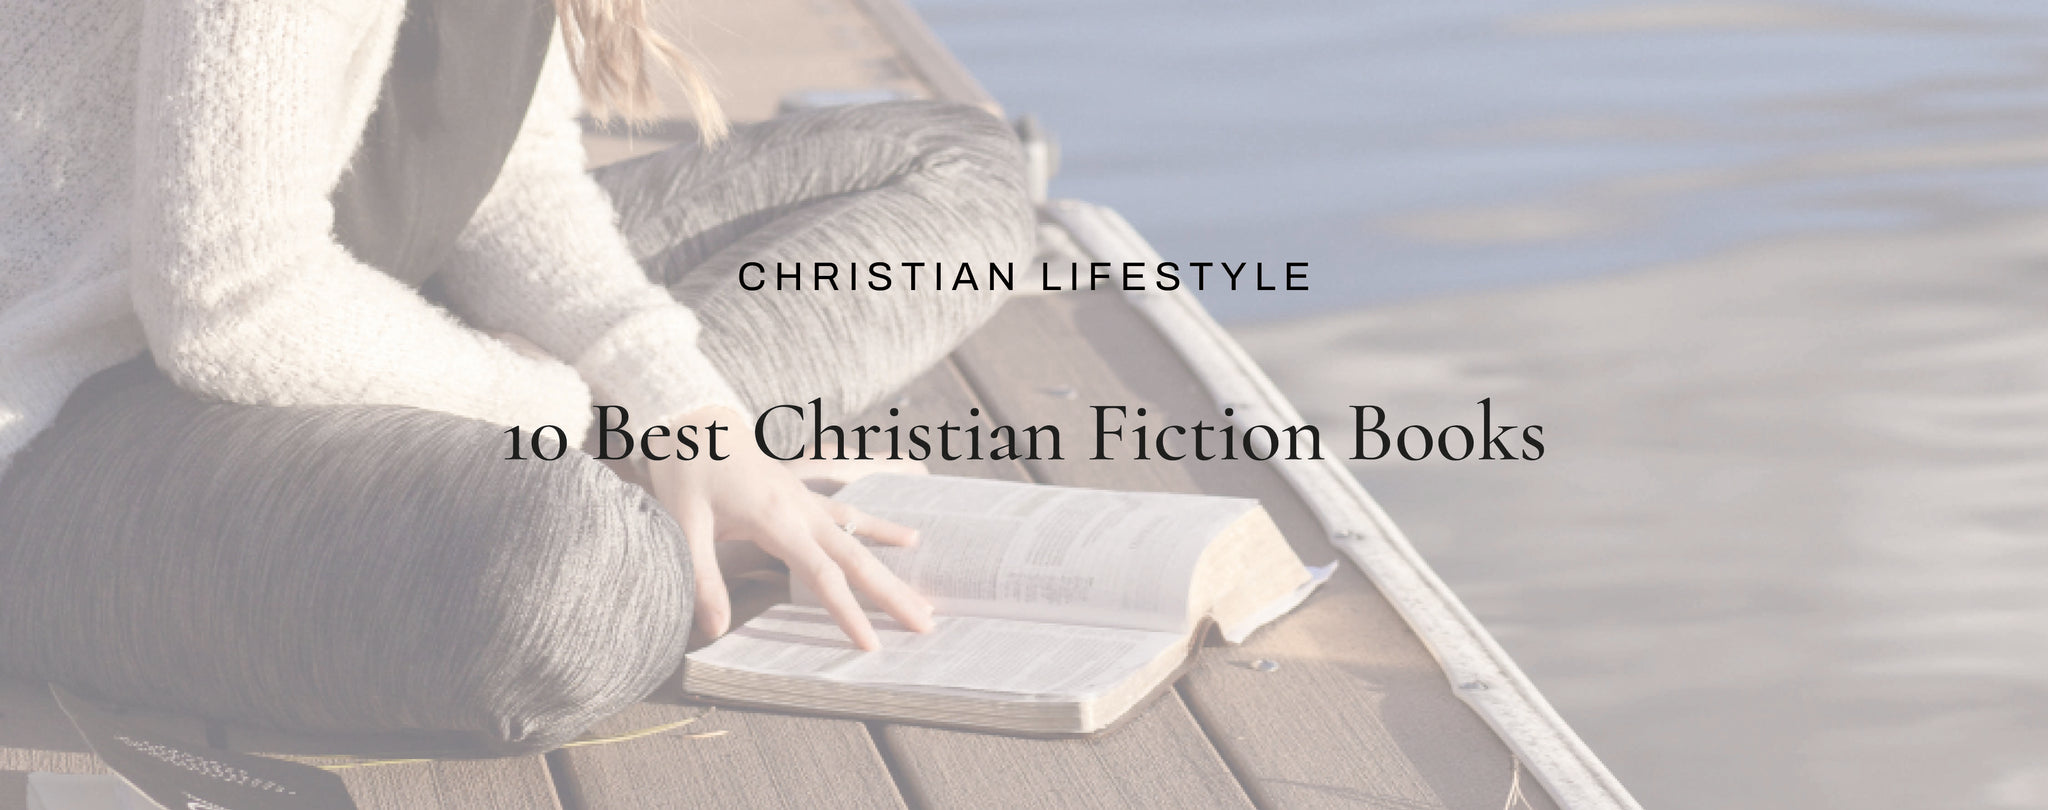 10 Best Christian Fiction Books